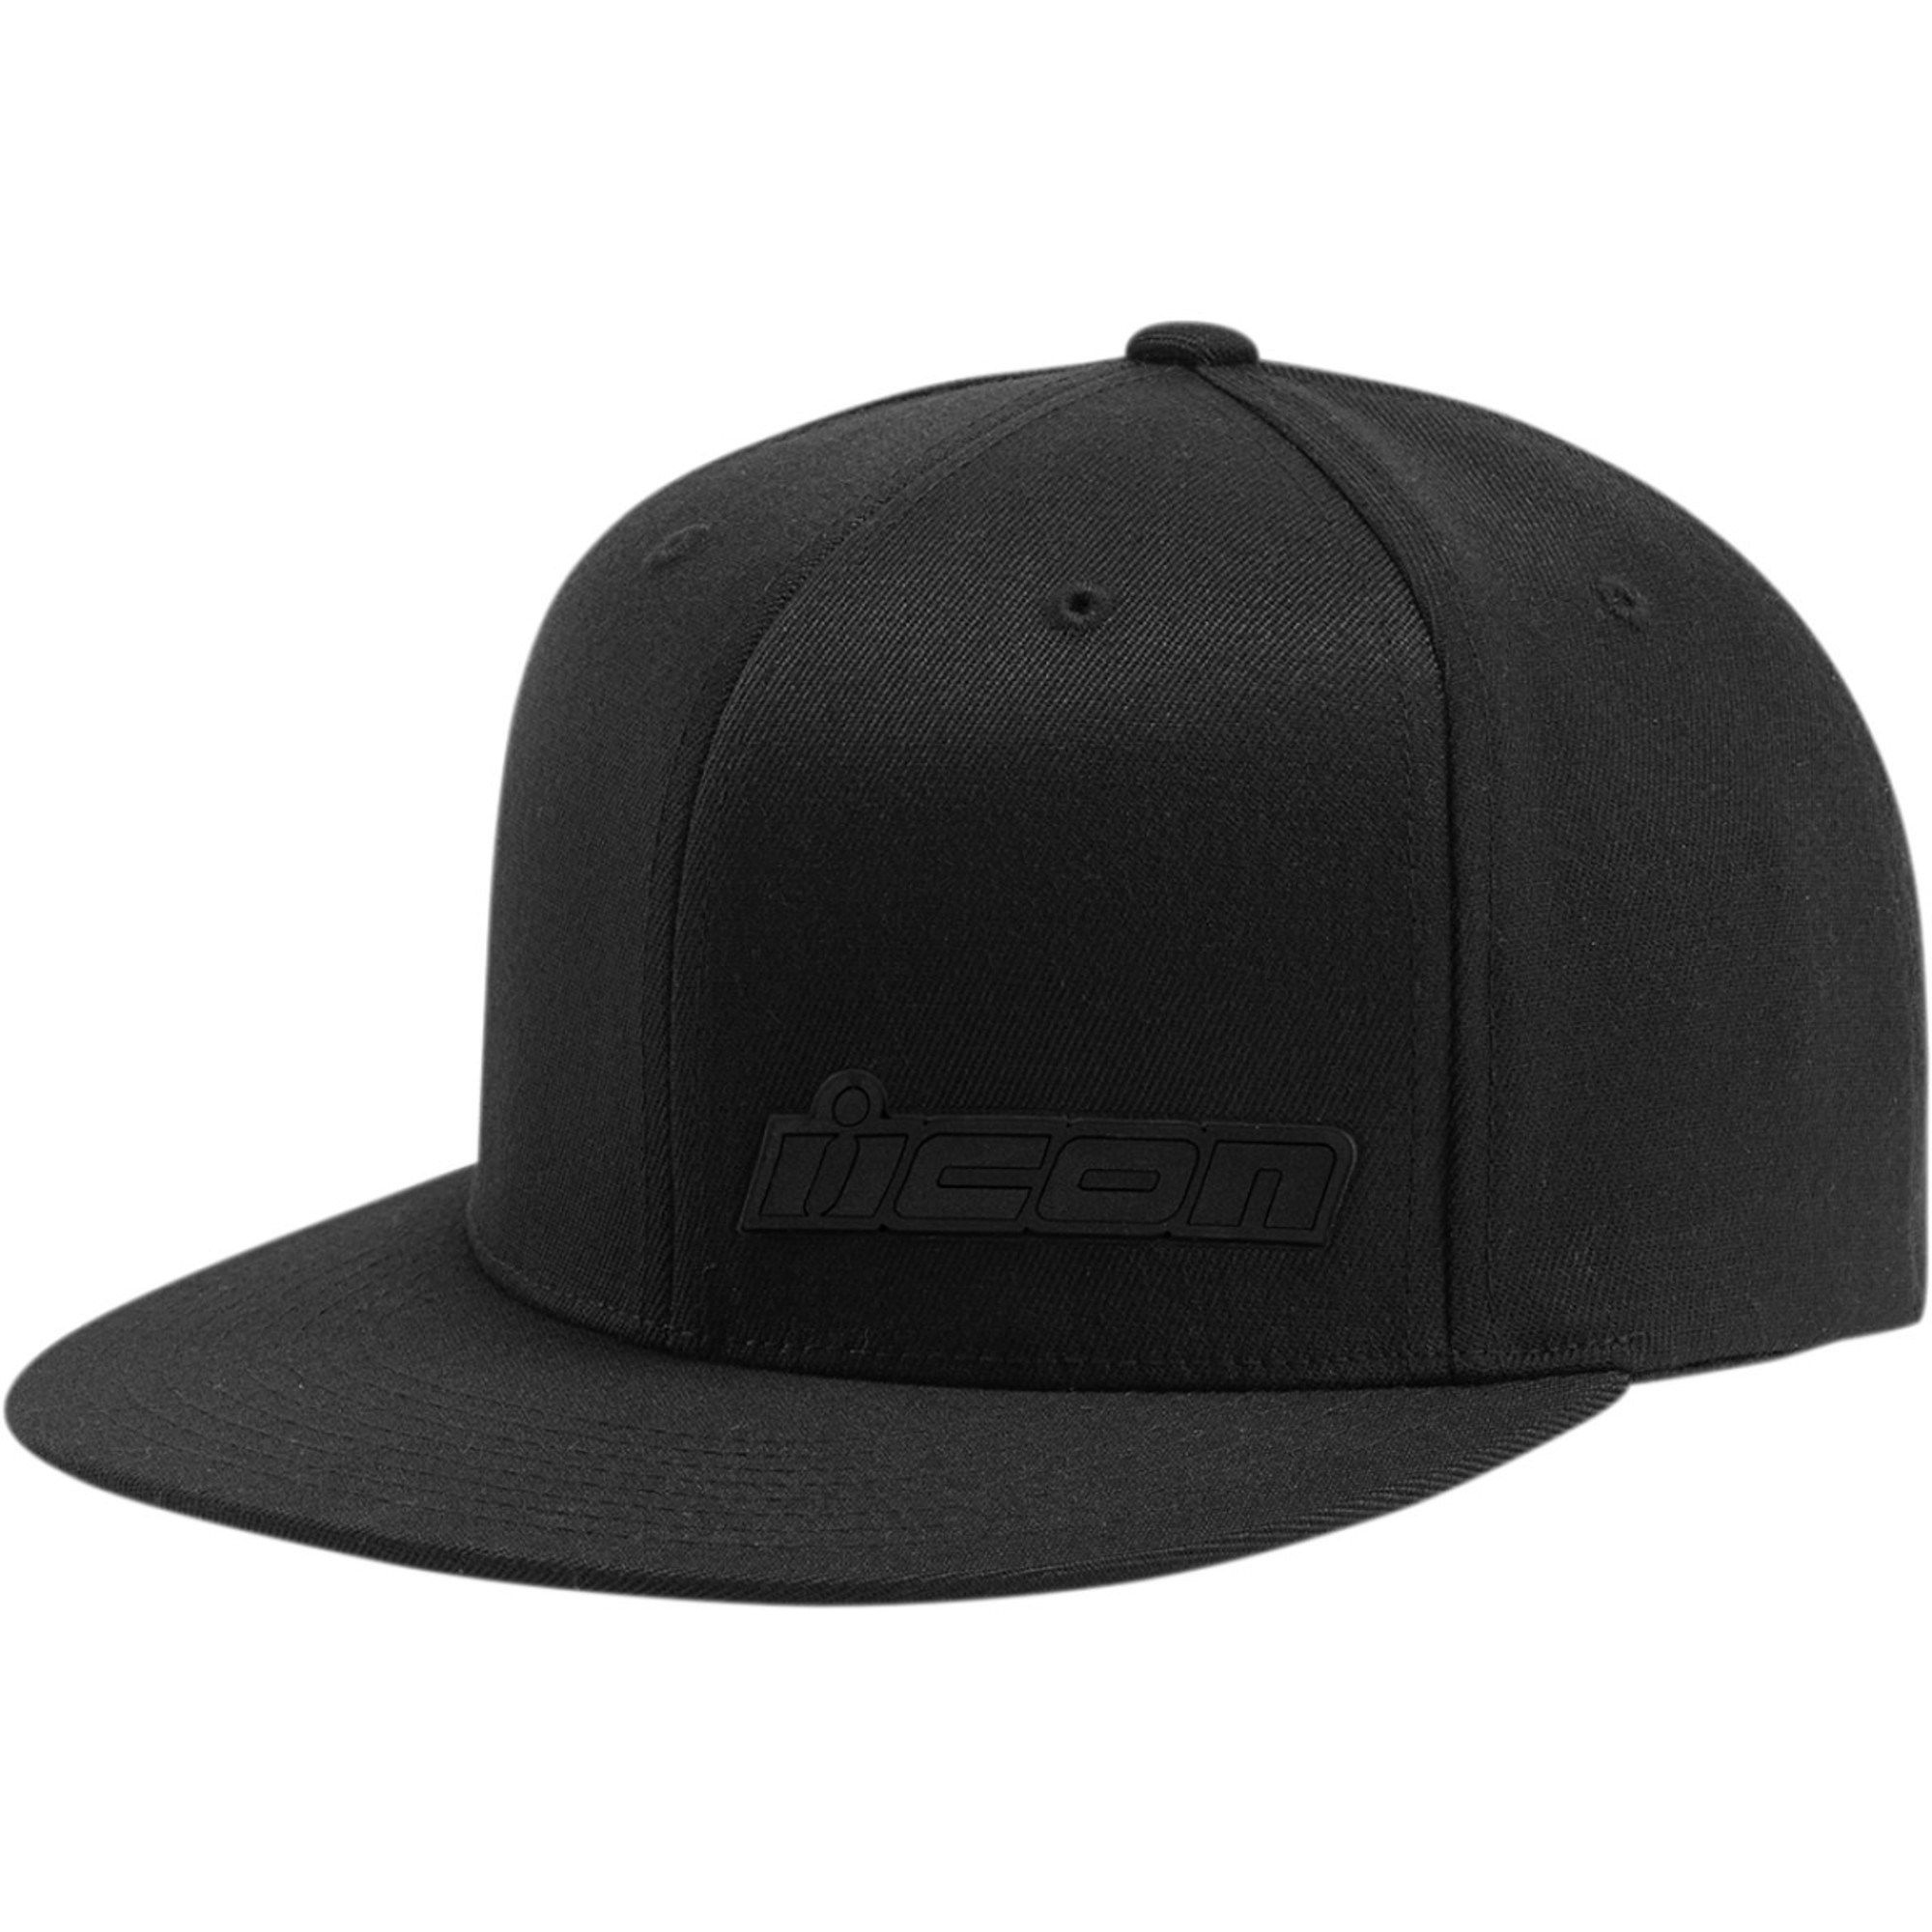 icon flexfit hats for men fused